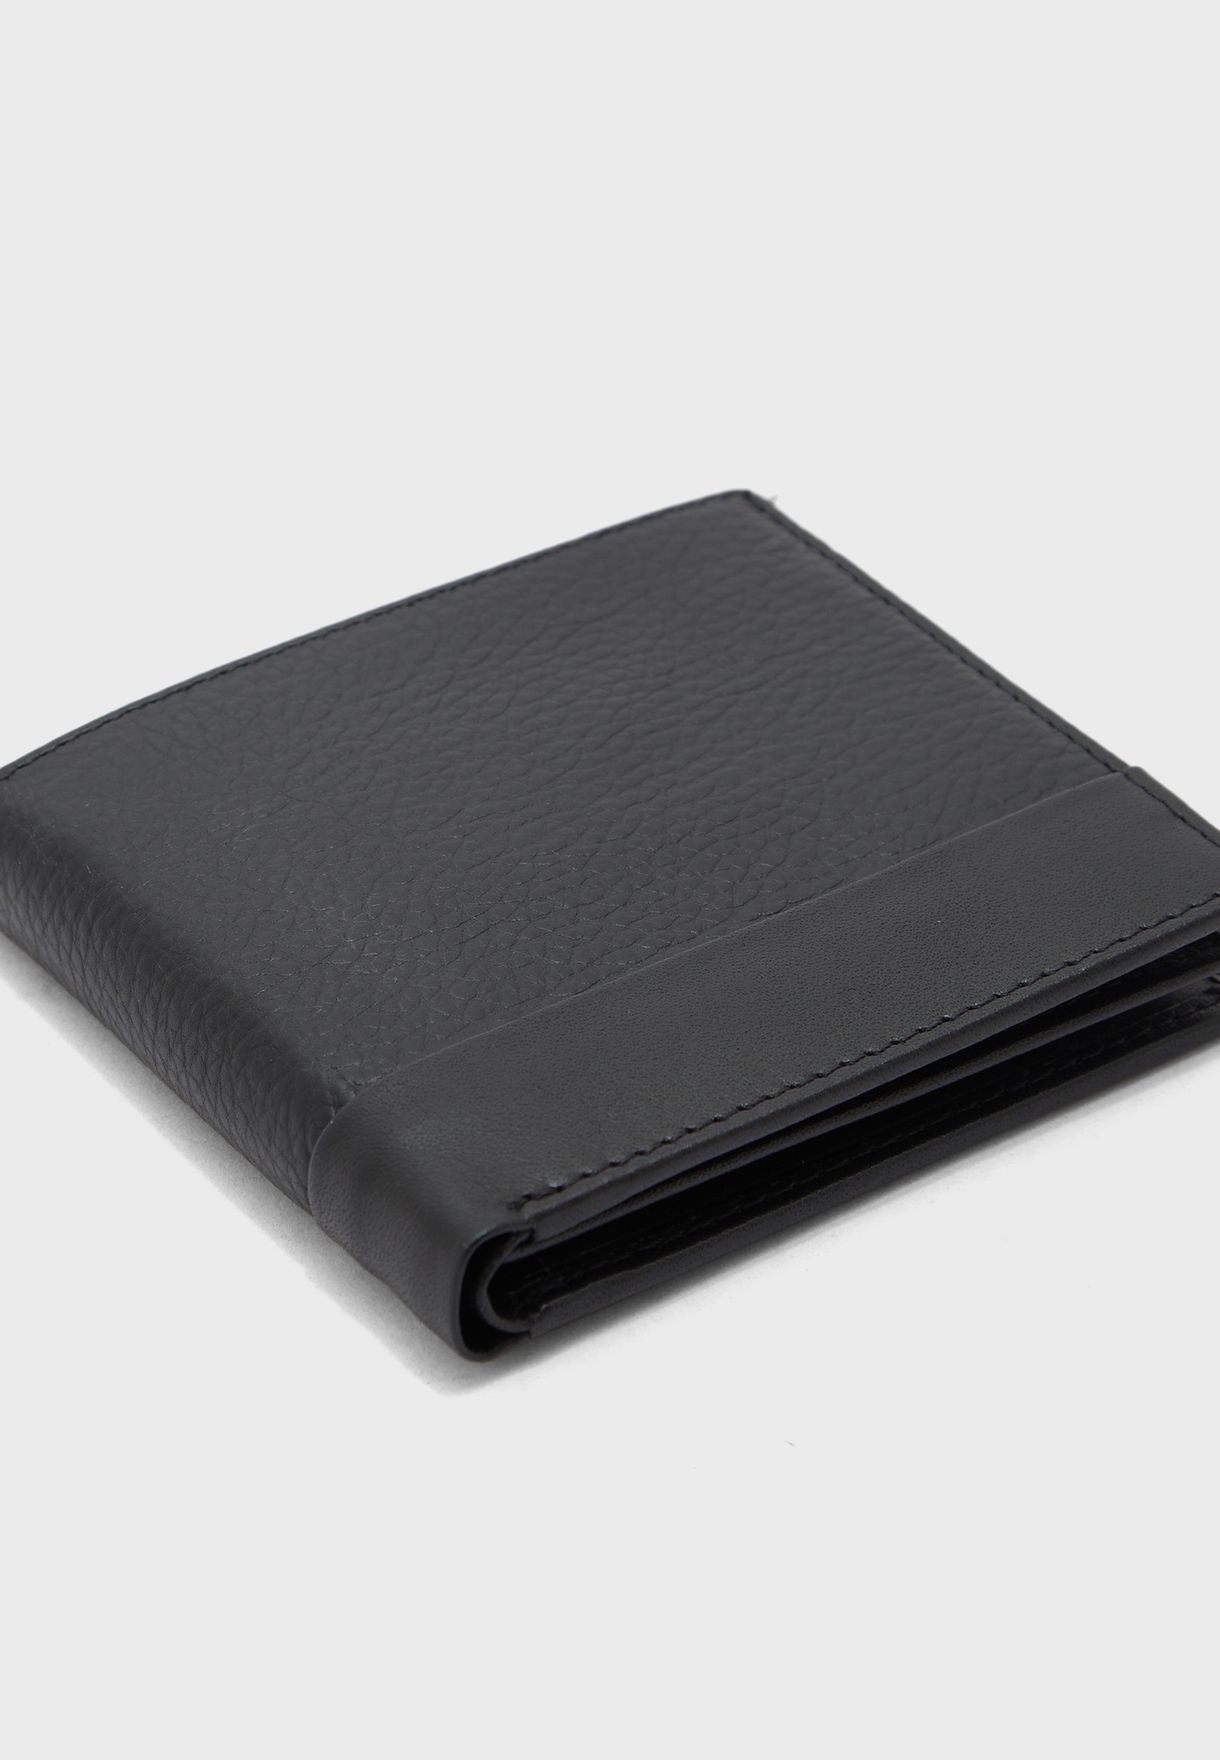 Premium Genuine Leather Wallet